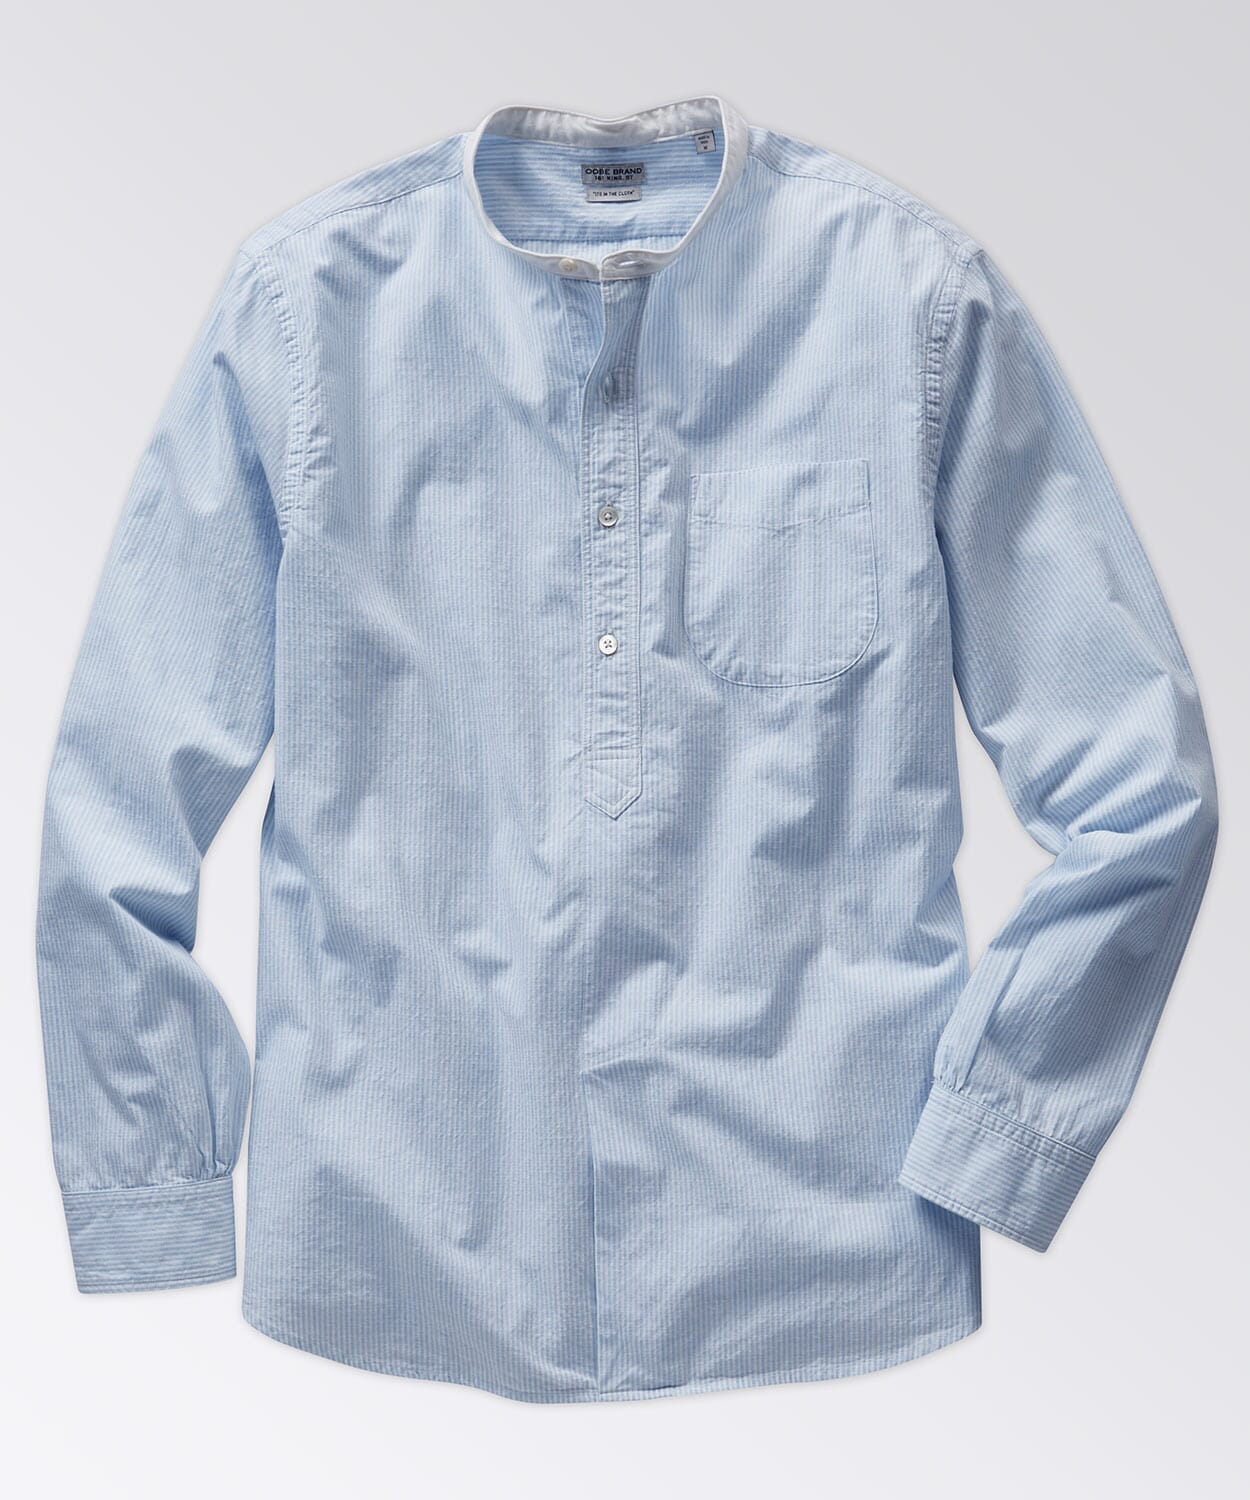 Rowan Shirt Button Downs OOBE BRAND Light Blue White Stripe S 